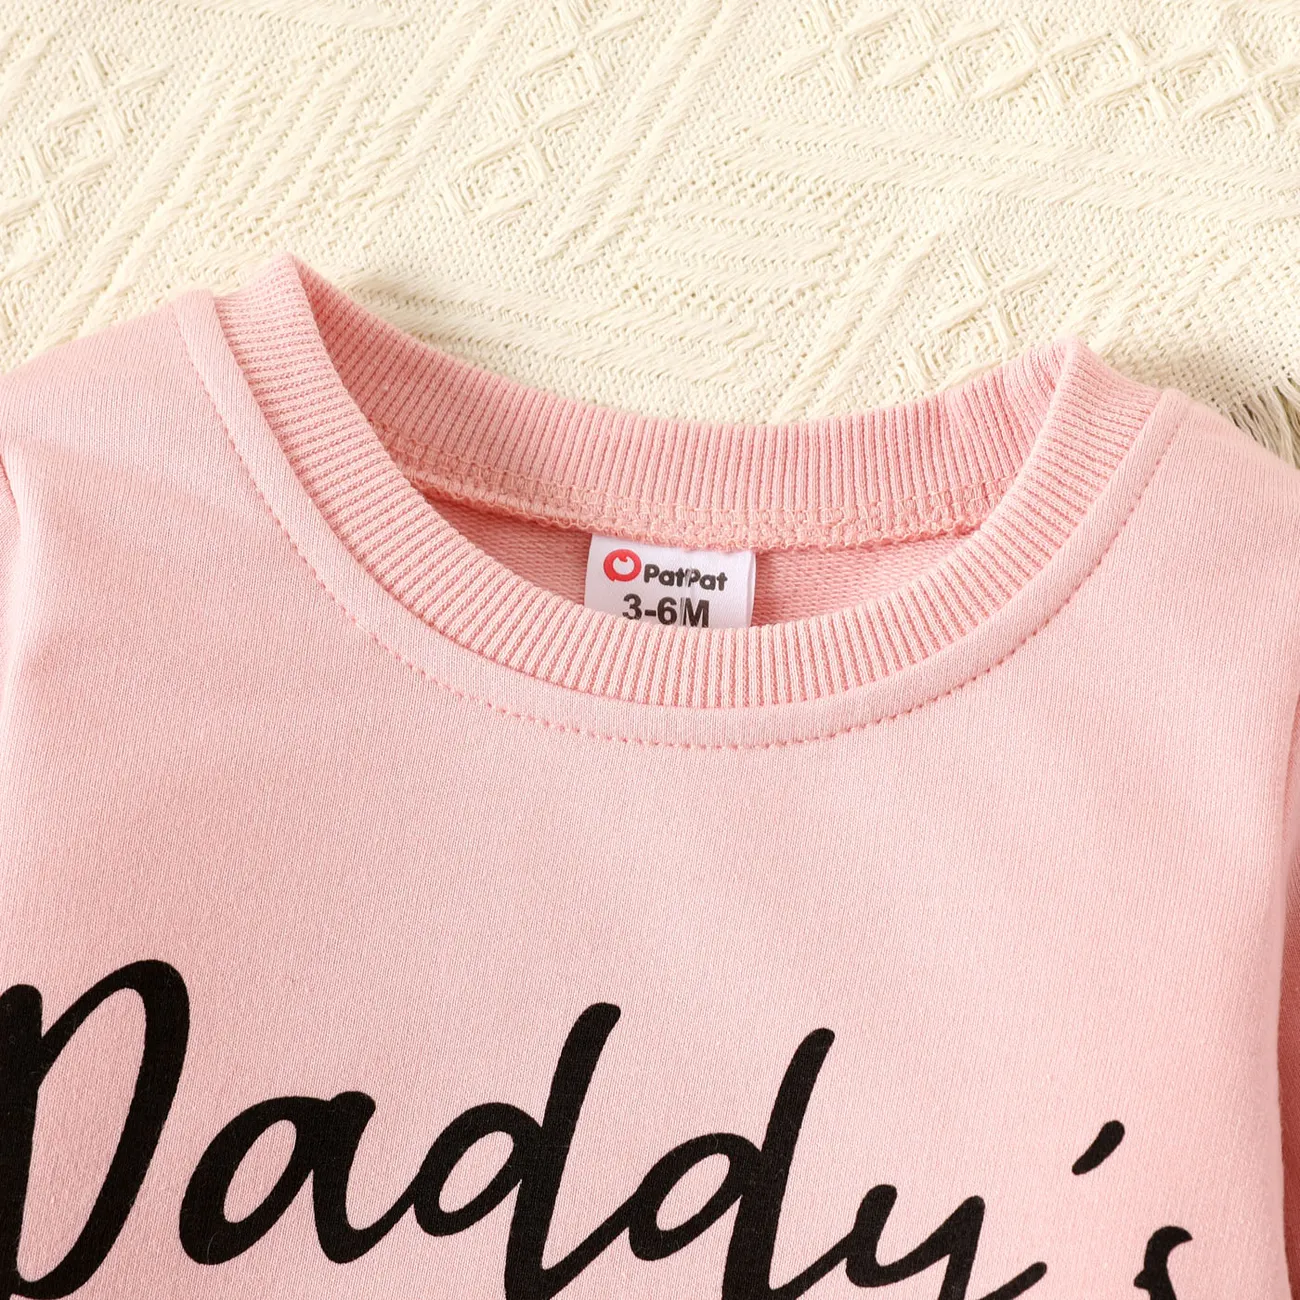 100% Cotton Baby Boy/Girl Letter Print Long-sleeve Pullover Sweatshirt Pink big image 1